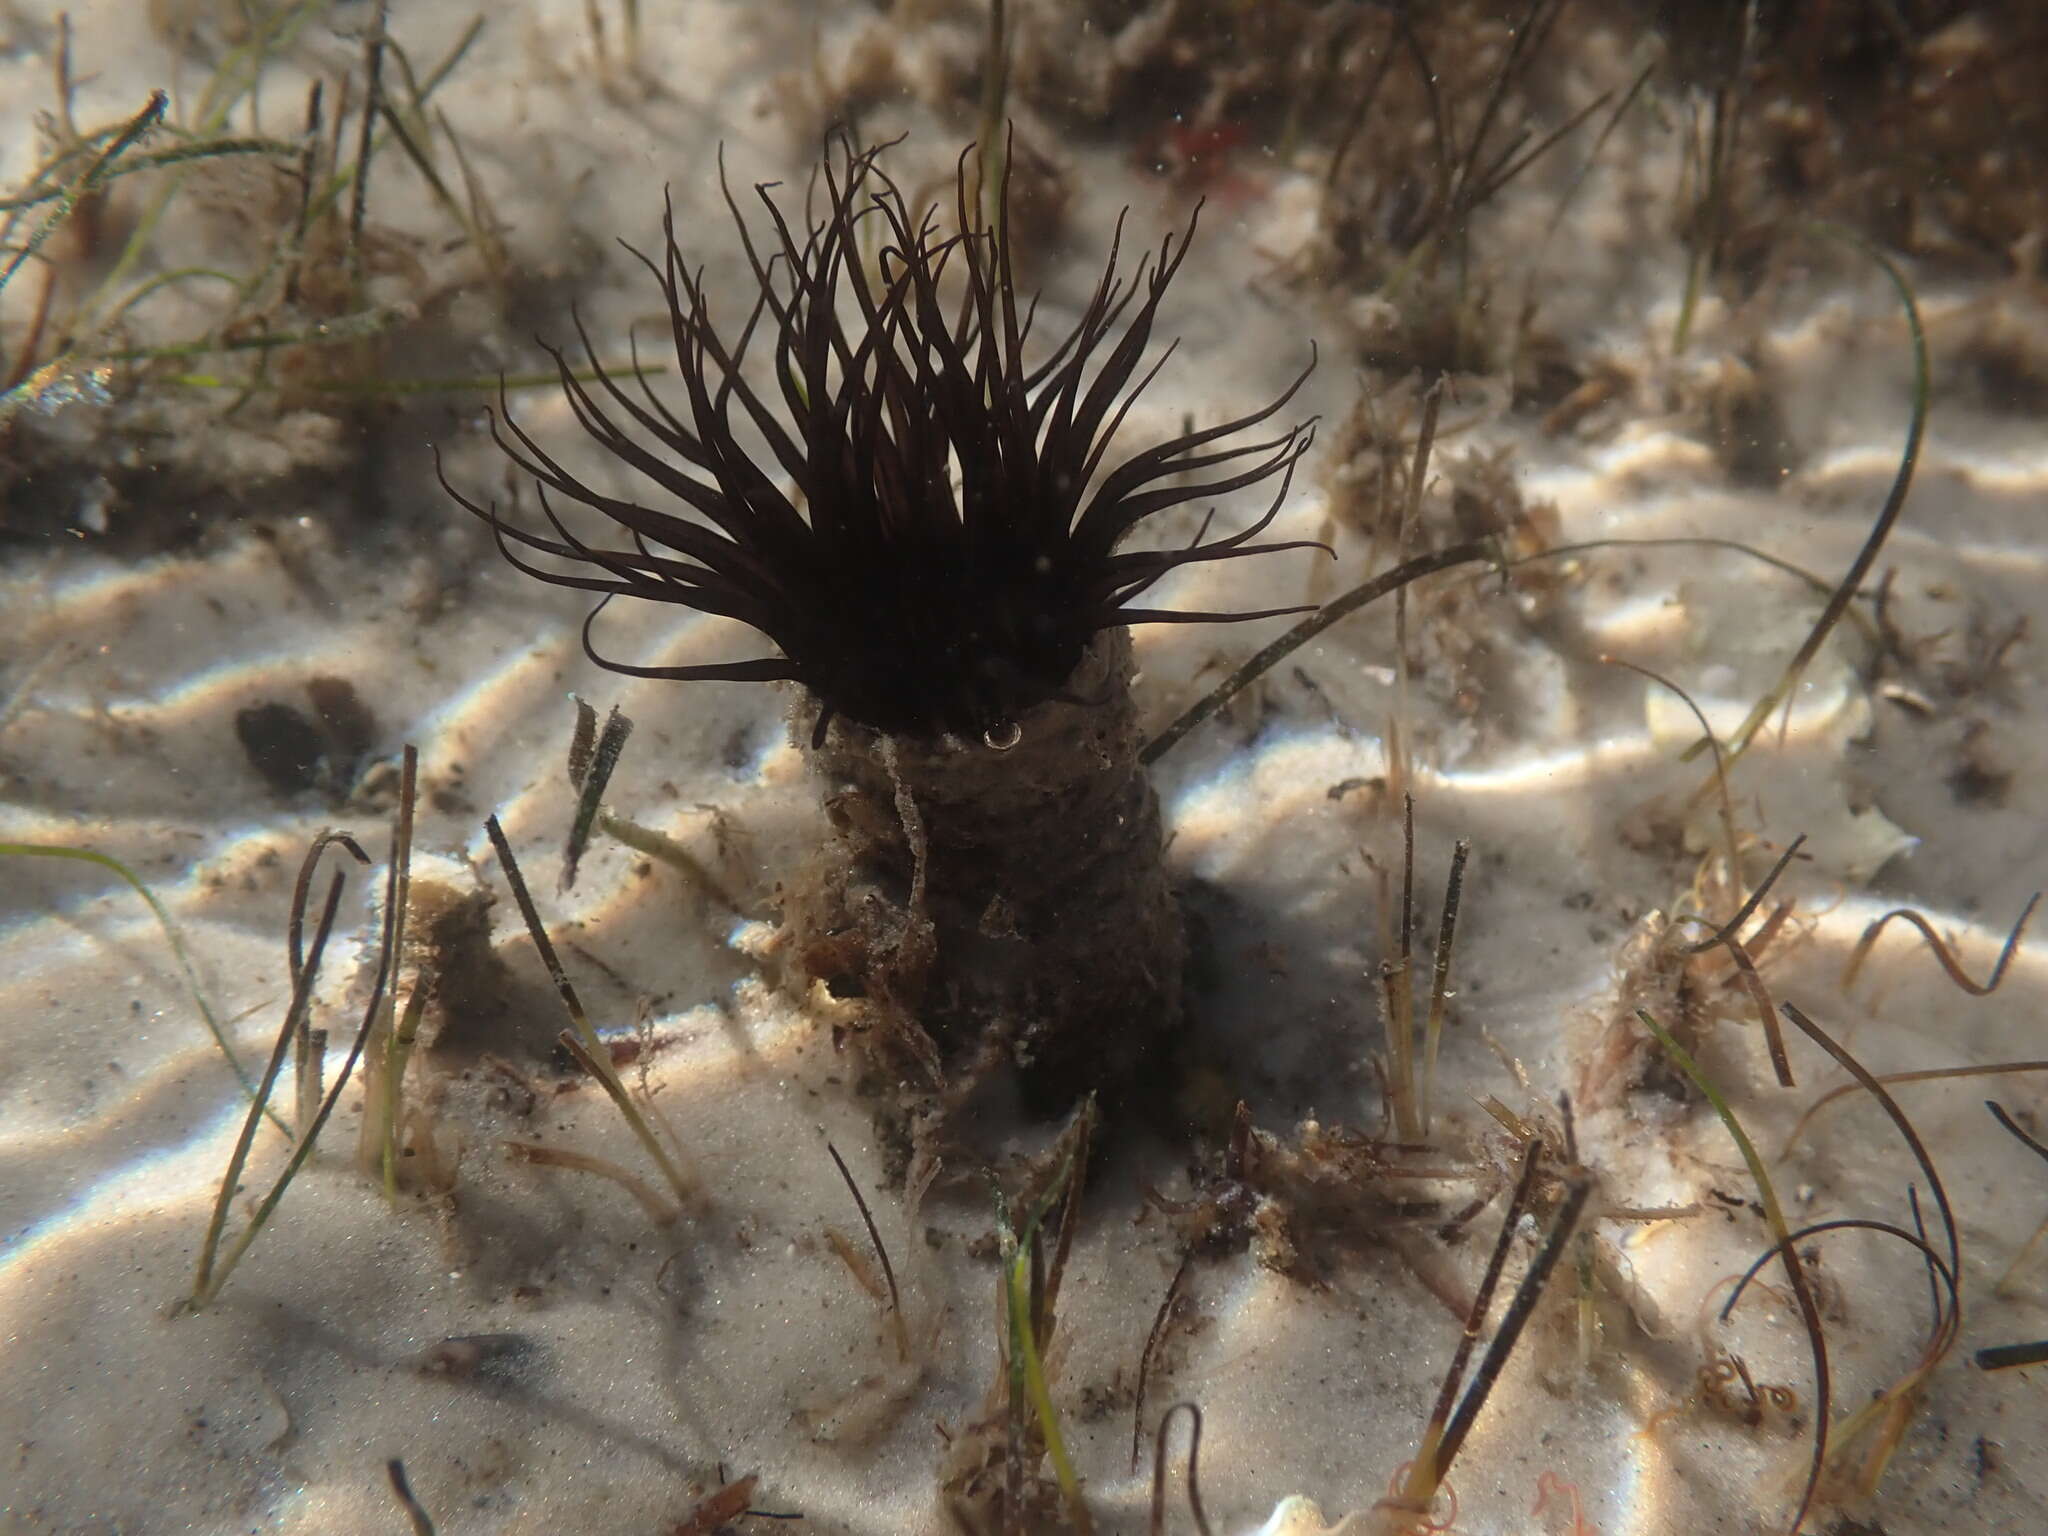 Image of American tube-dwelling anemone